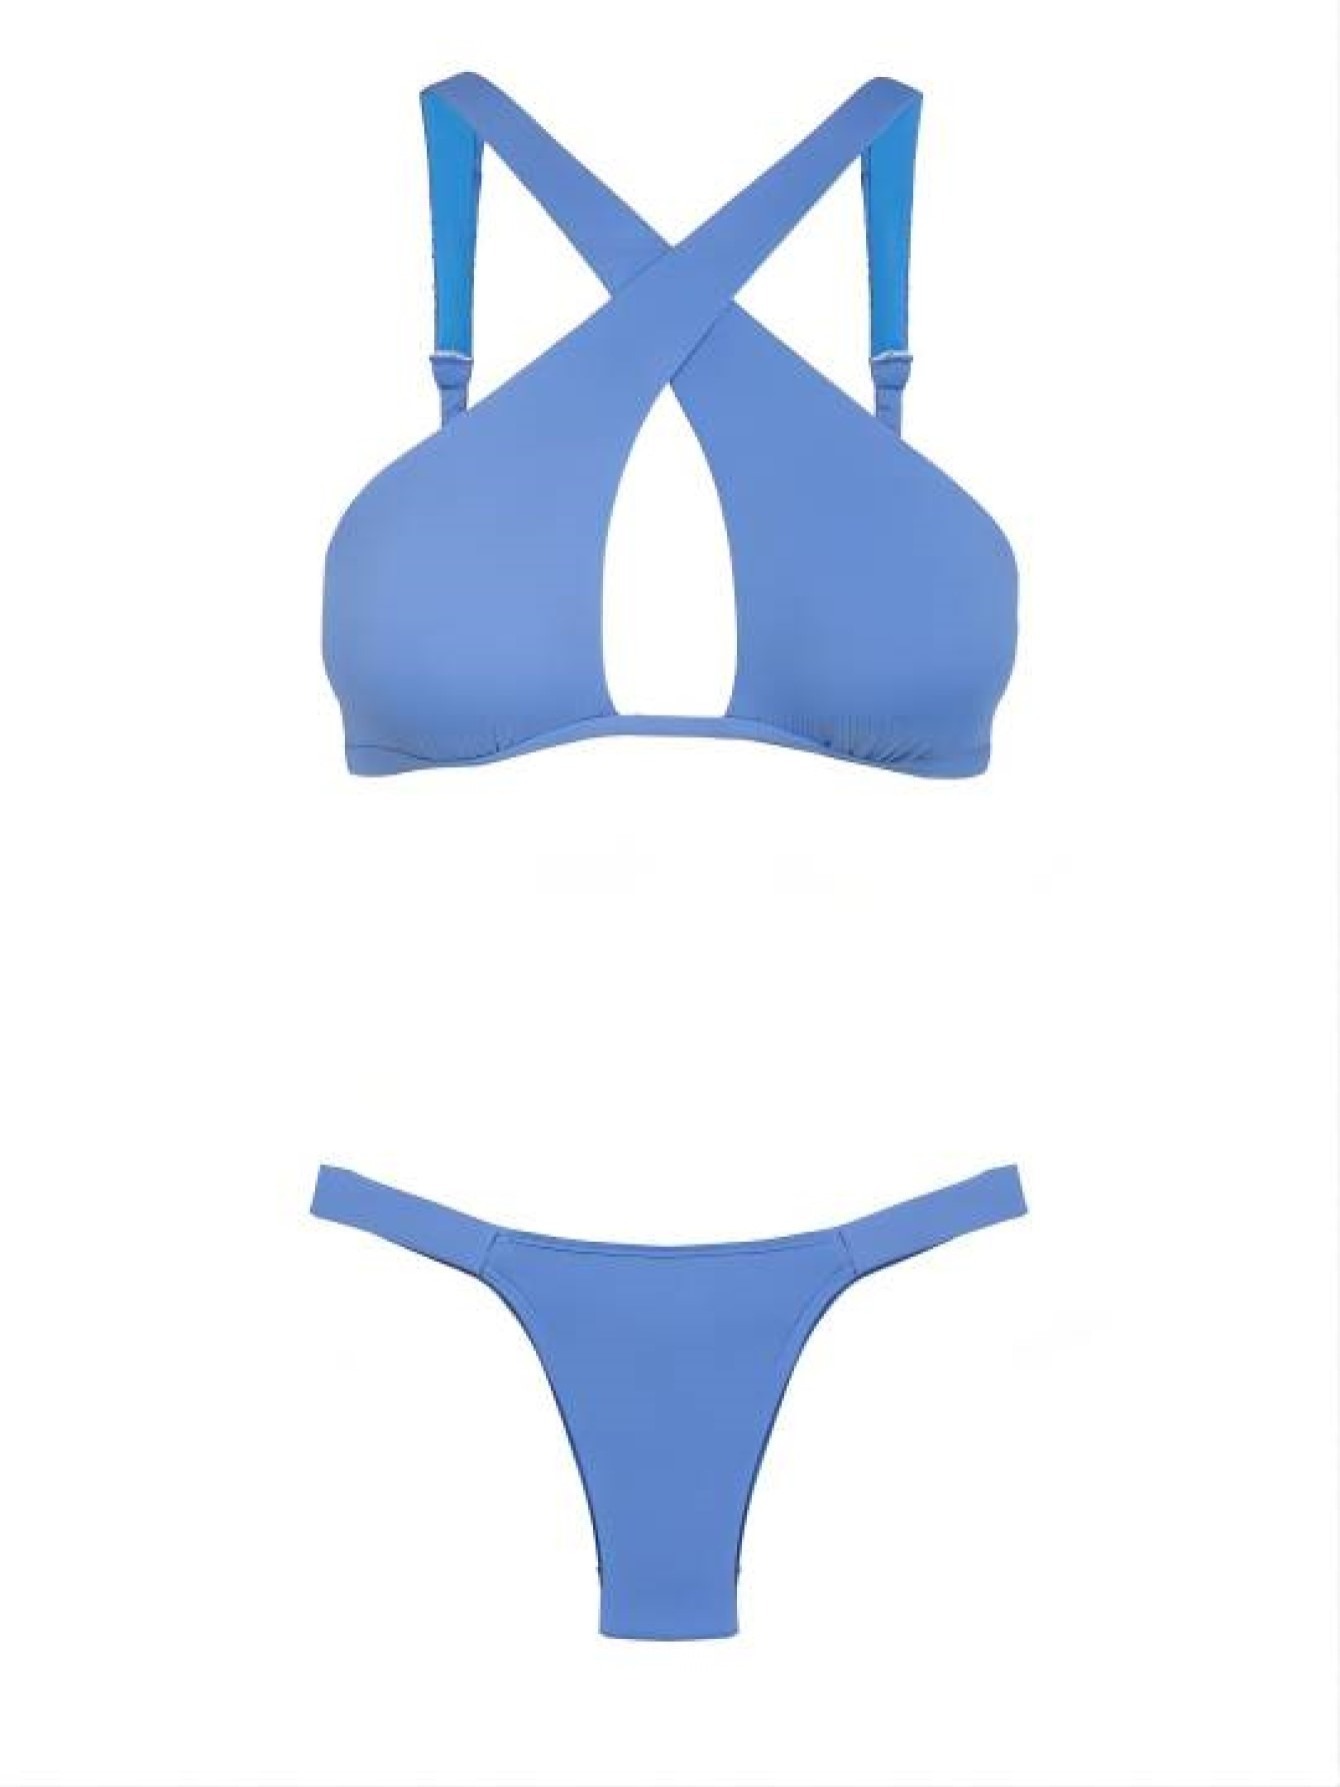 Criss Cross Open Up Bra Centre Bikini Sets, Solid Color High Cut Two Piece  Swimsuit, Women's Swimwear, Women's Clothing